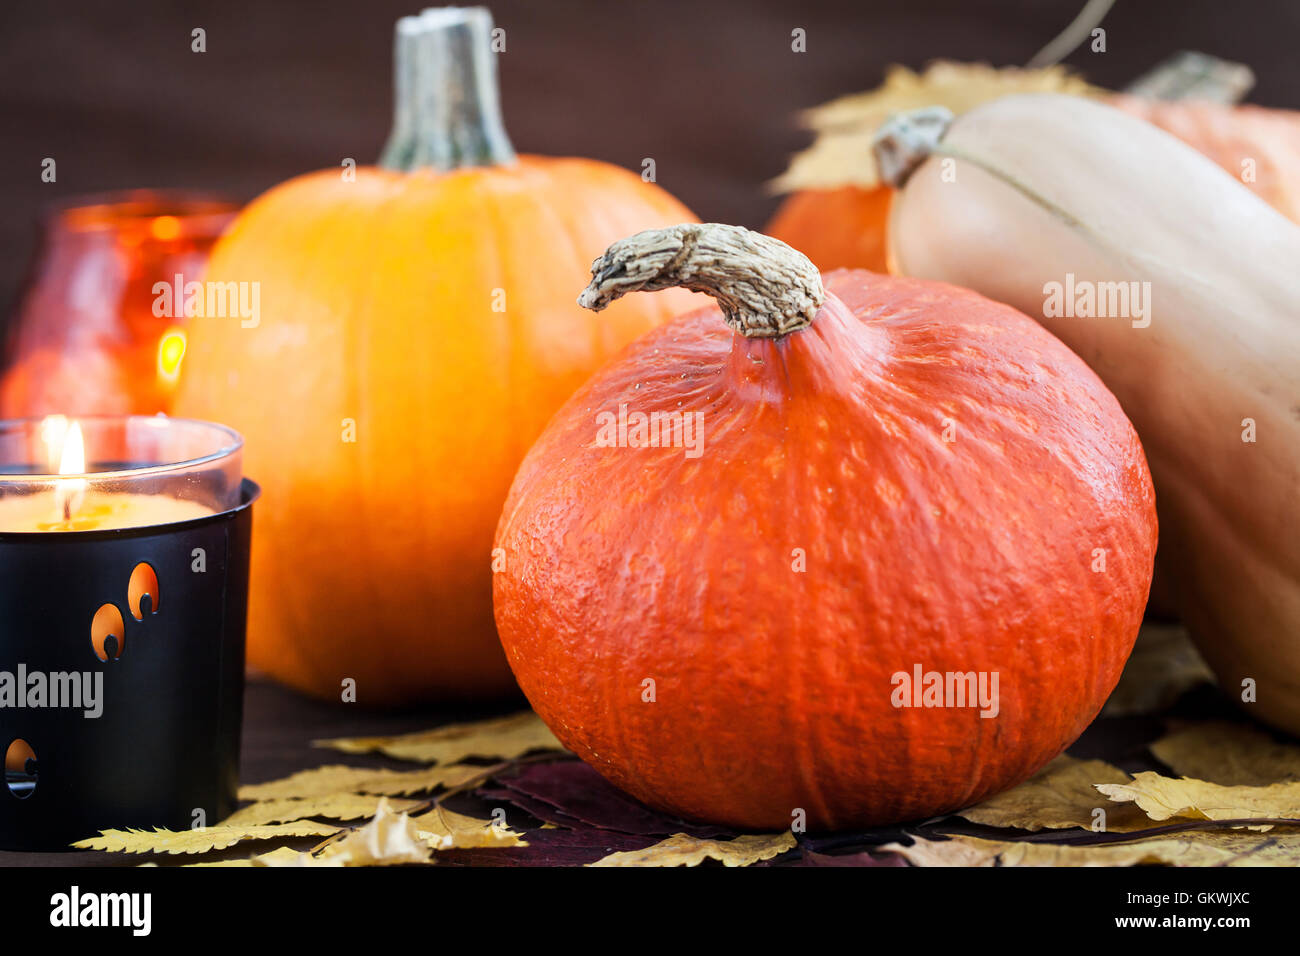 Decorative halloween pumpkins and candles Stock Photo